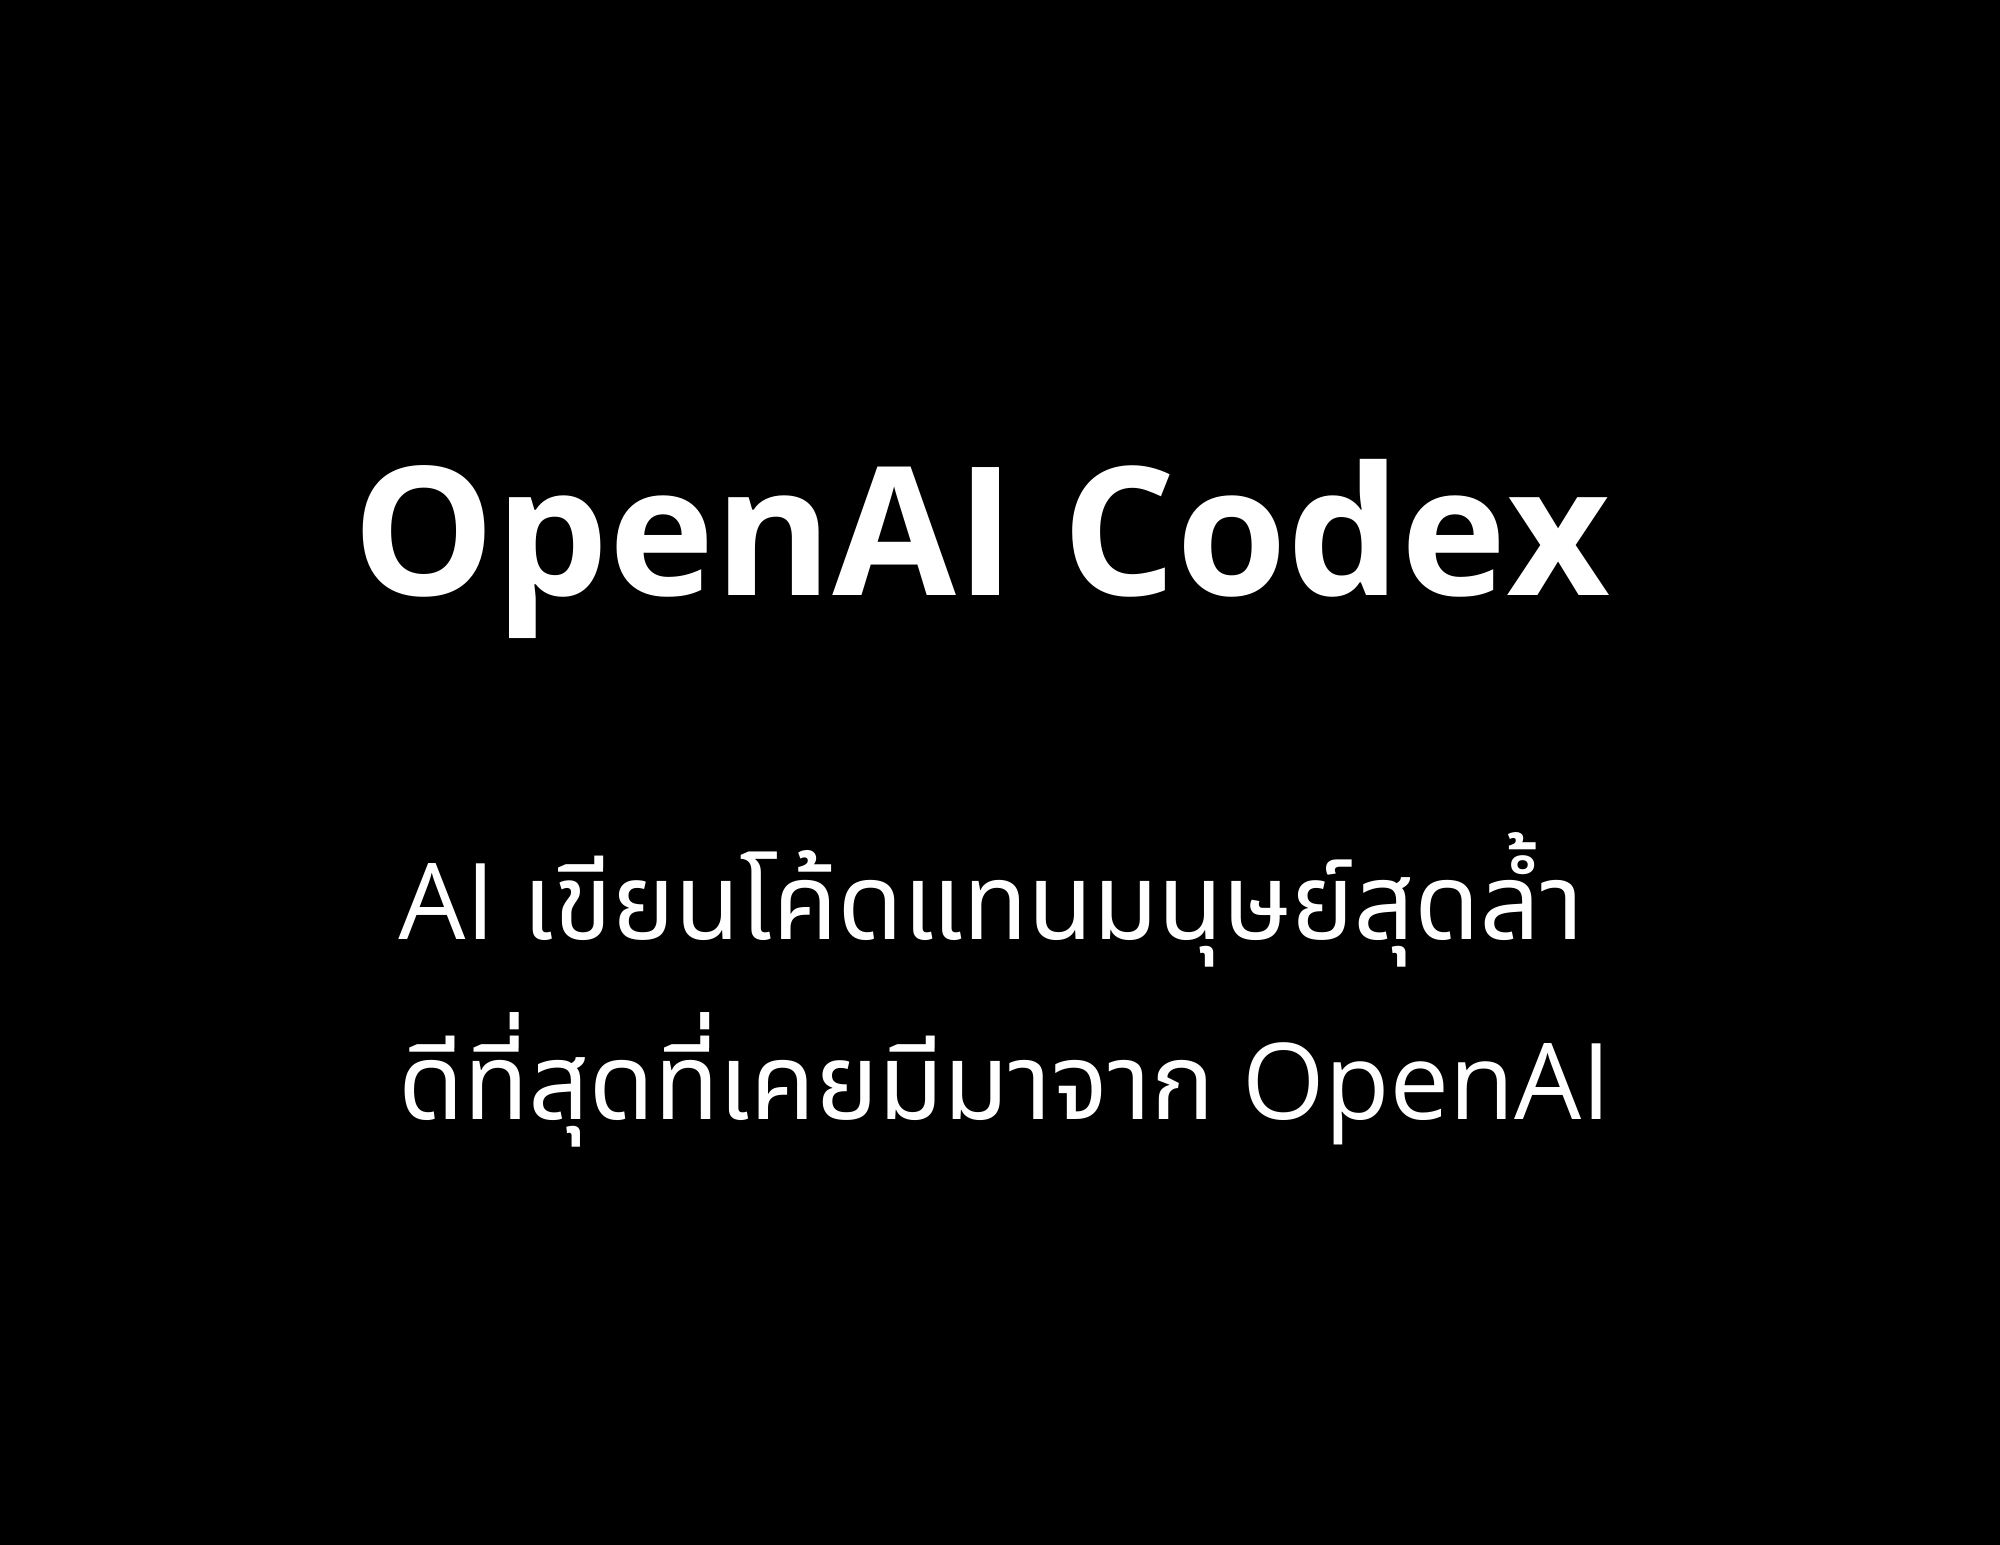 OpenAI Codex - AI เขียนโค้ดสุดล้ำ